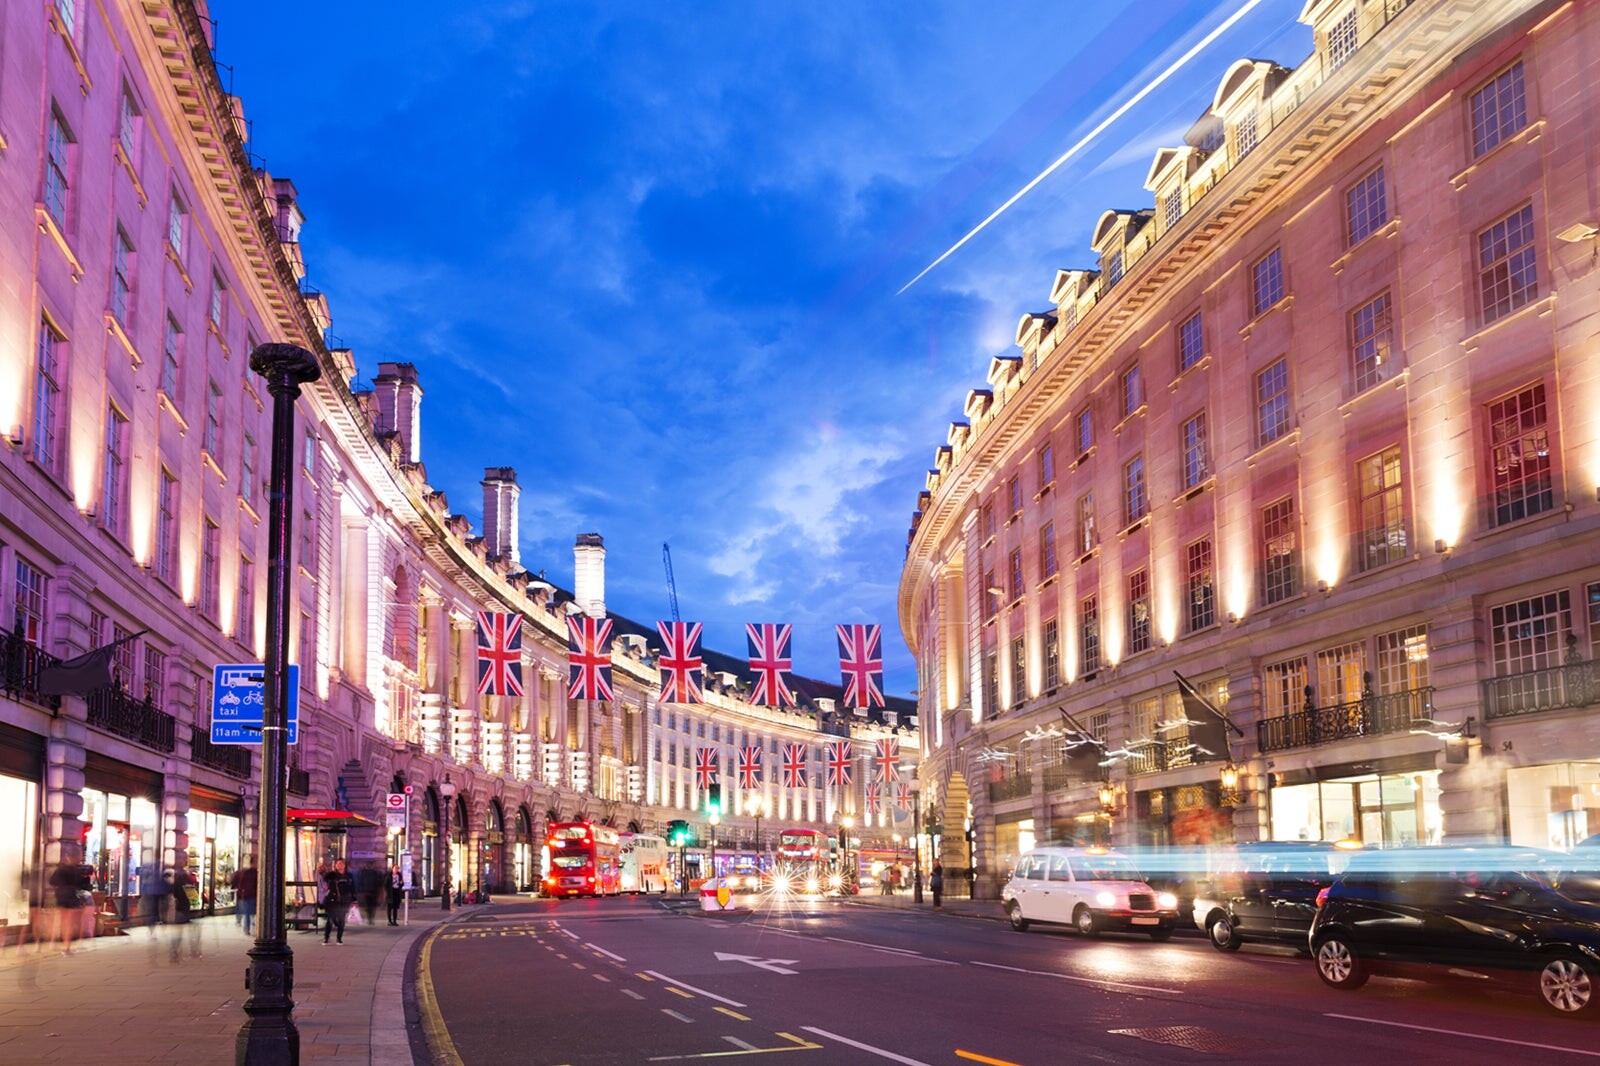 More information about "Οι 20 πιο εμπορικοί δρόμοι της Ευρώπης - Στην πρώτη θέση η Oxford Street στο Λονδίνο"